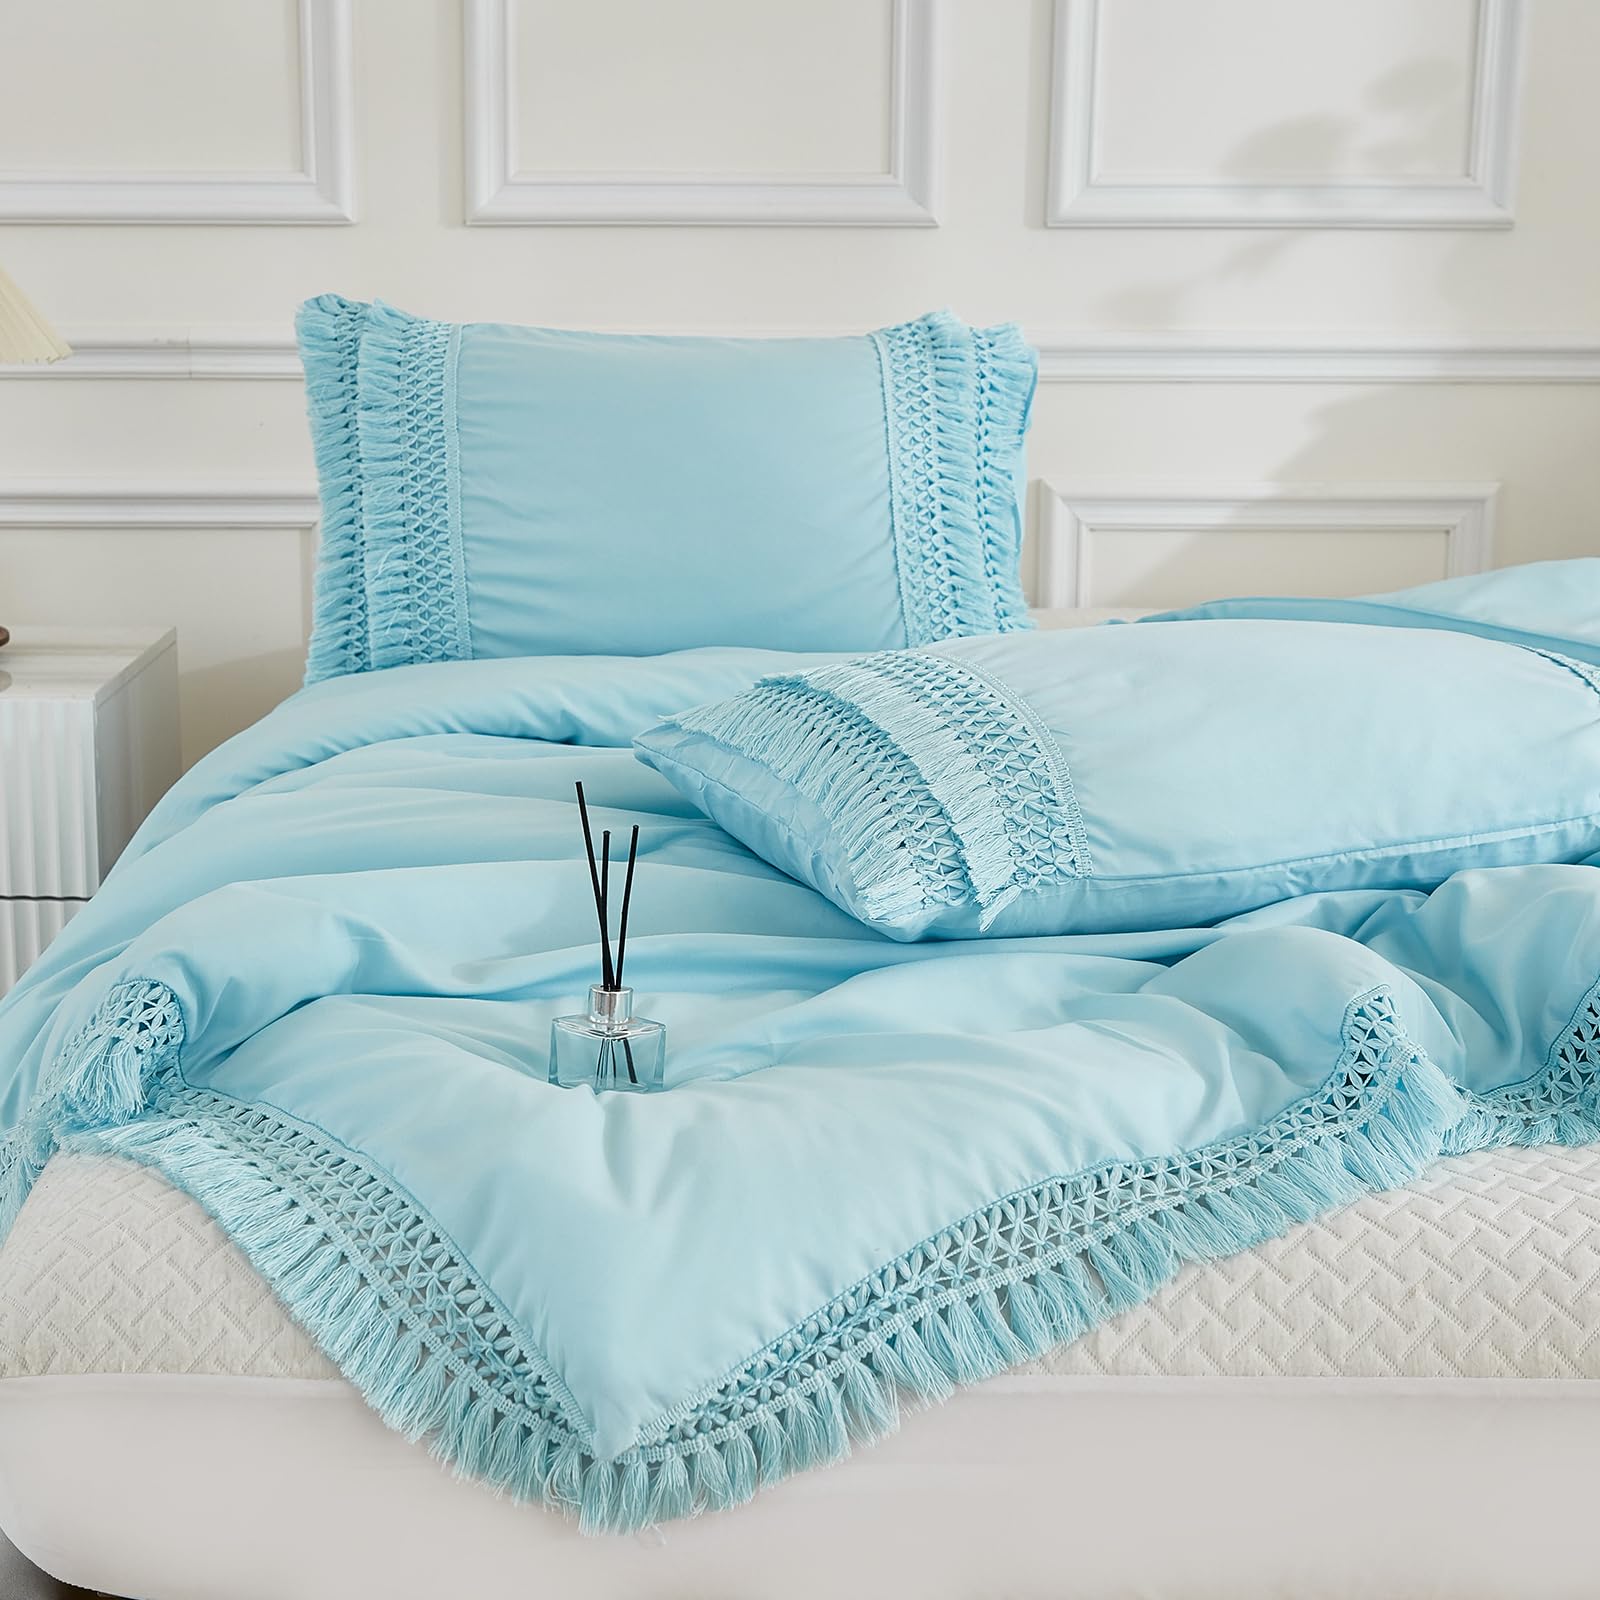 Bedorm Queen Size Comforter Set Boho, Baby Blue Bedding Comforter Super Soft 3 Pieces Bed Set, Bohemian Tassel Macrame Decor Farmhouse 